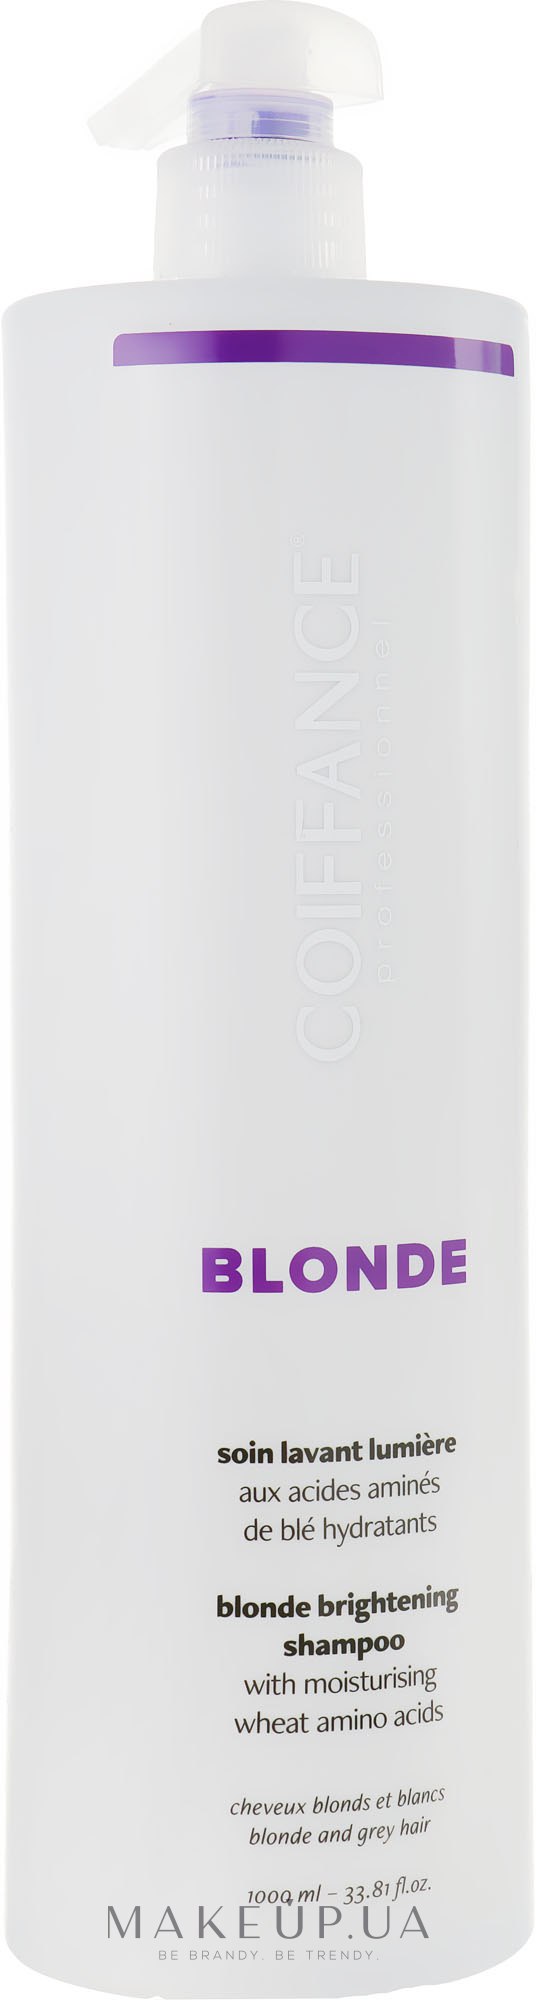 Шампунь для светлых волос - Coiffance Professionnel Blond Brightening Shampoo  — фото 1000ml